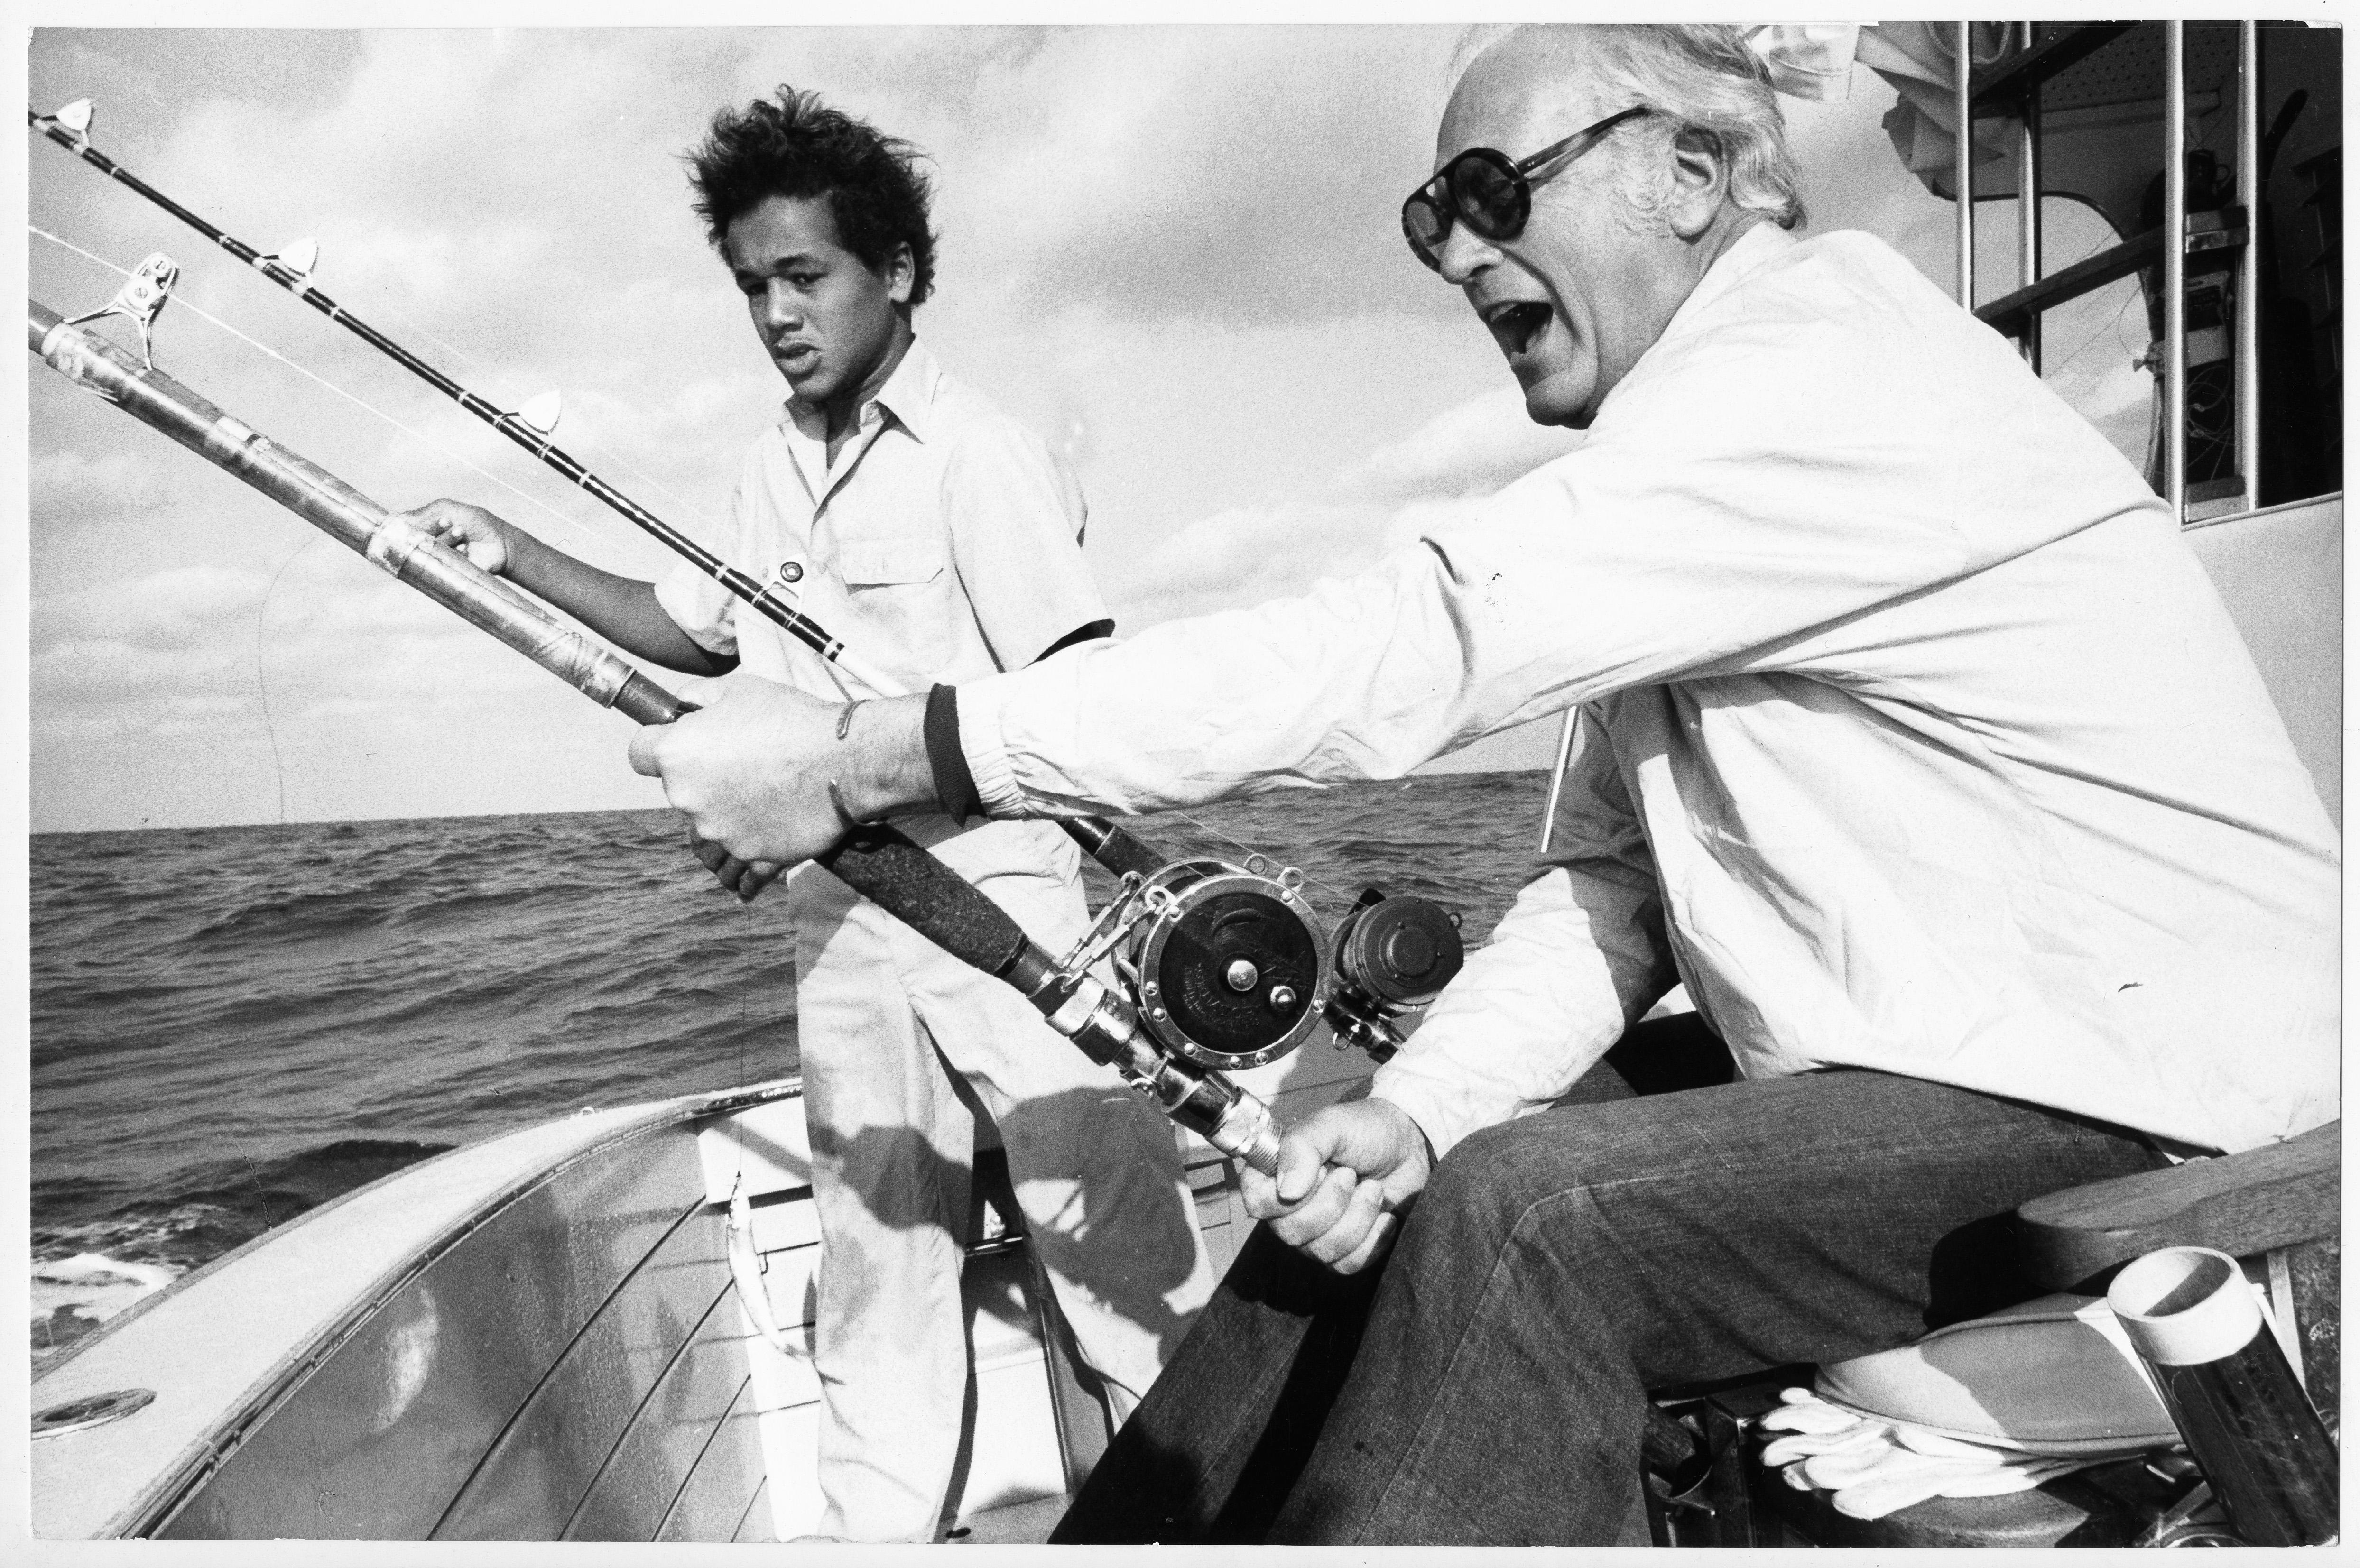 Emil Perauer Black and White Photograph - Holiday on the Bahamas - Curd Jürgens hunting on Barakudas, circa 1971.